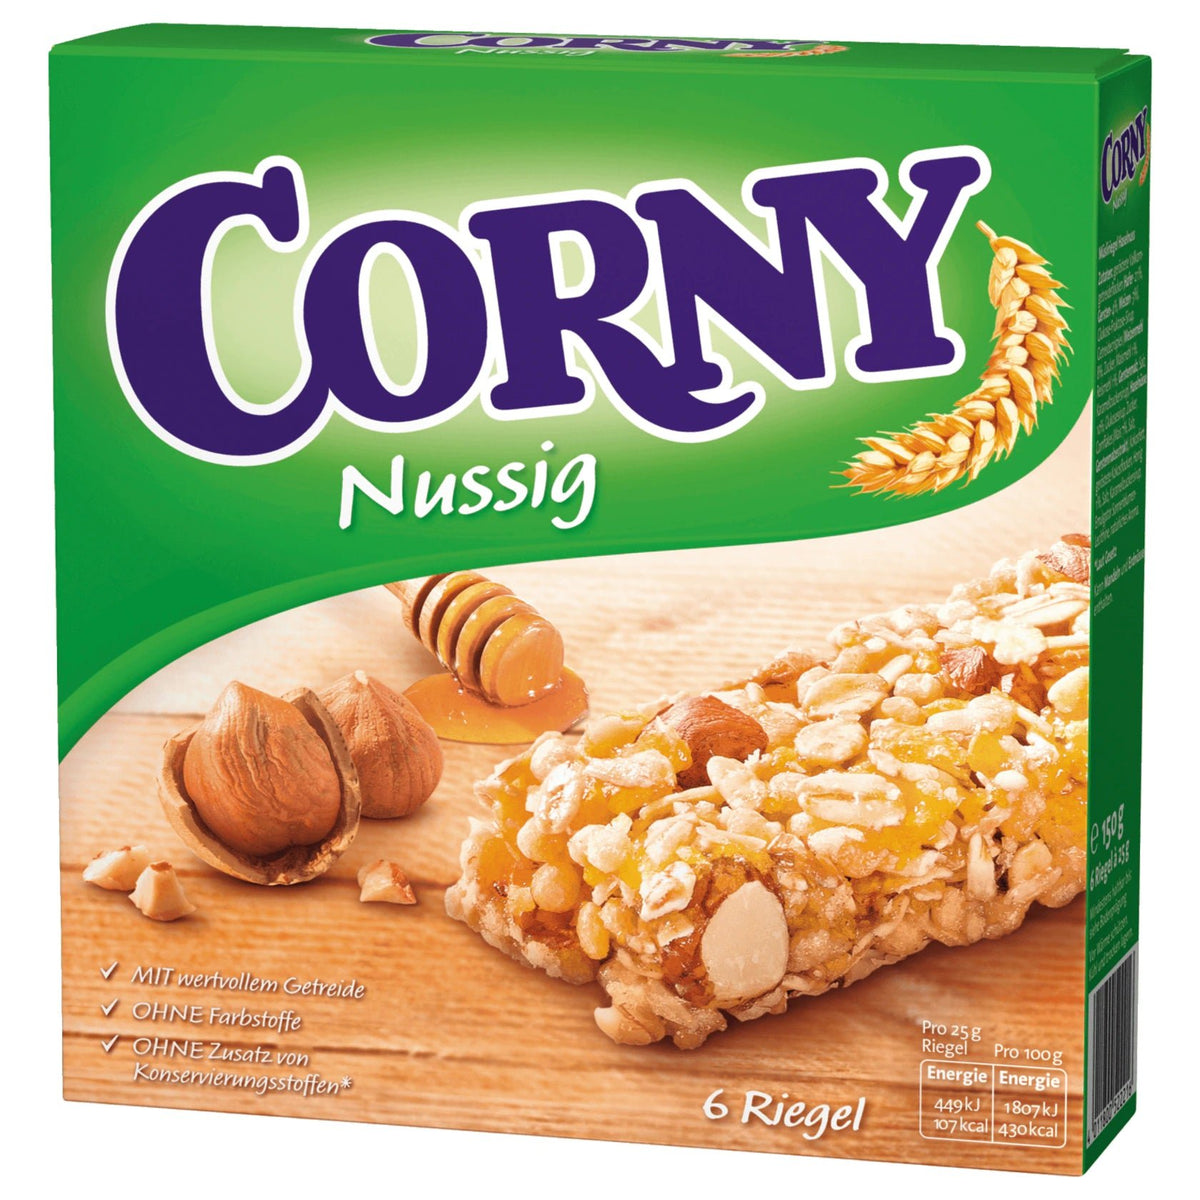 Corny Nussig 6x25g - küblerGo